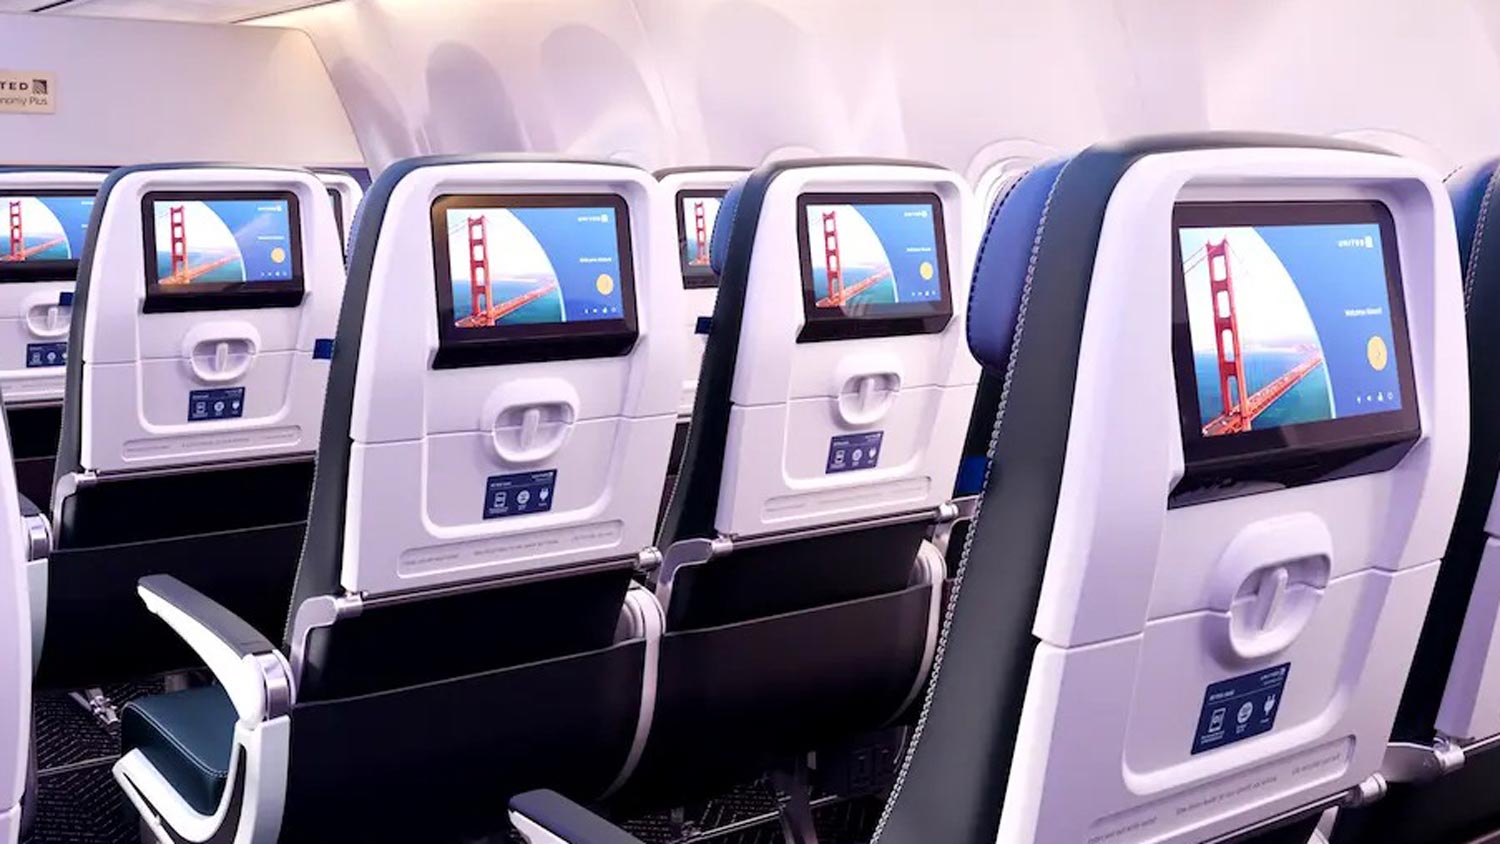 United Airlines Menawarkan Sistem Infohibur Yang Menyokong Audio Bluetooth